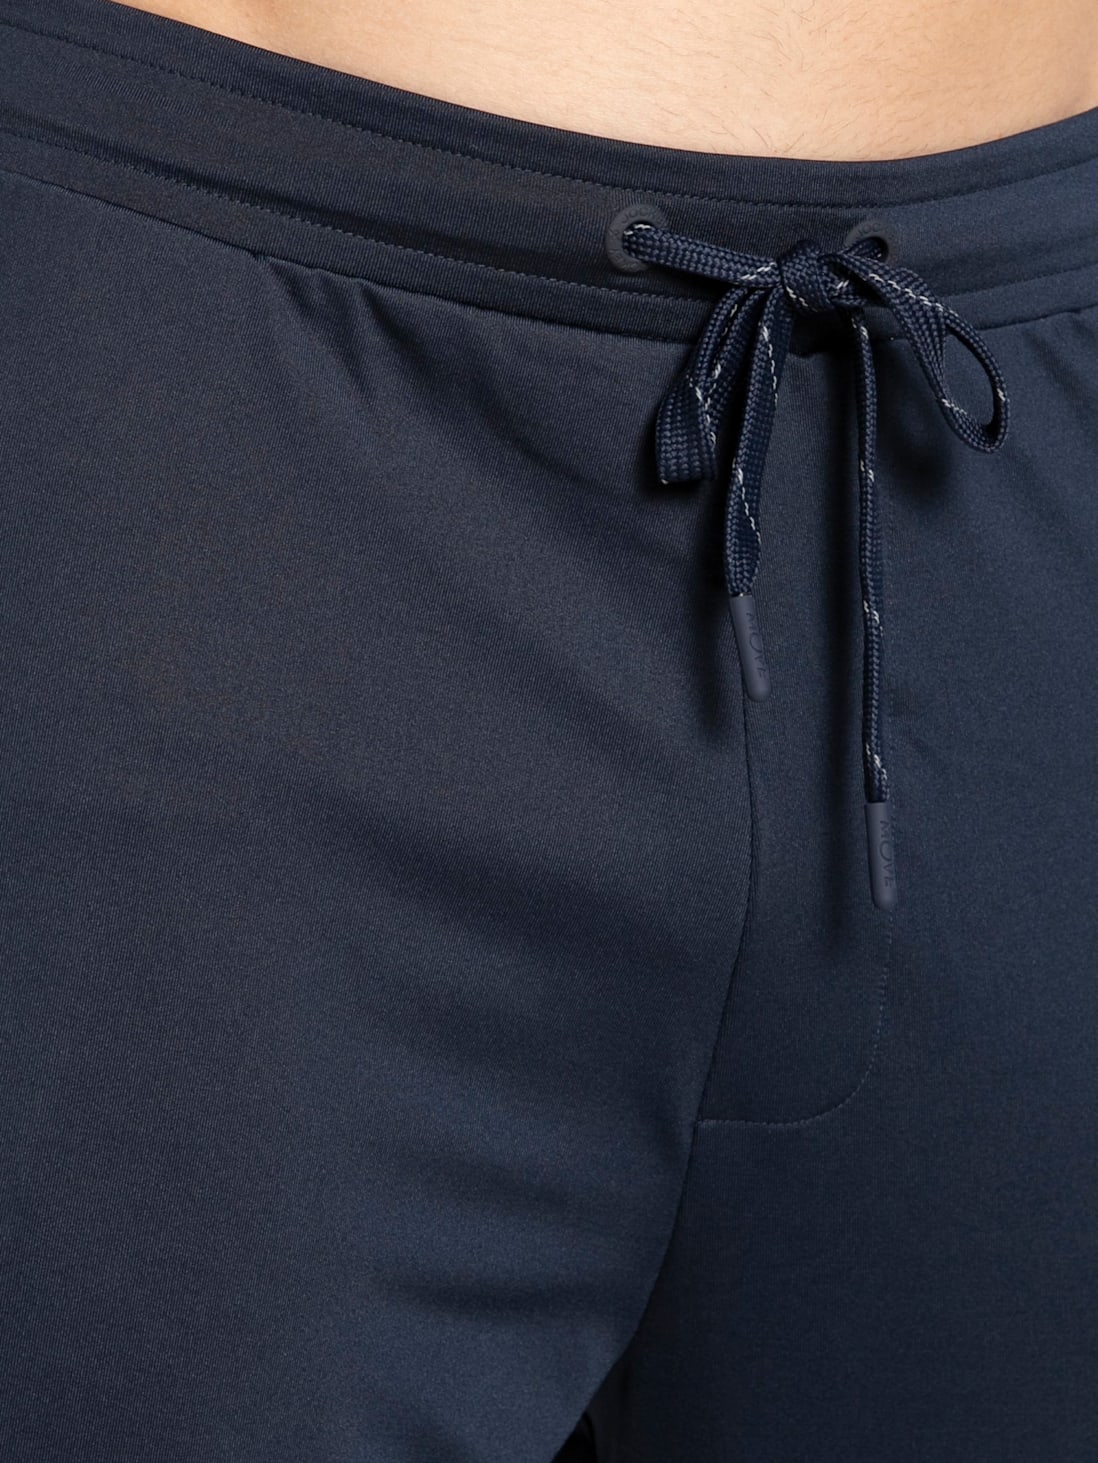 Buy Men's Microfiber Elastane Stretch Slim Fit Trackpants with Zipper ...